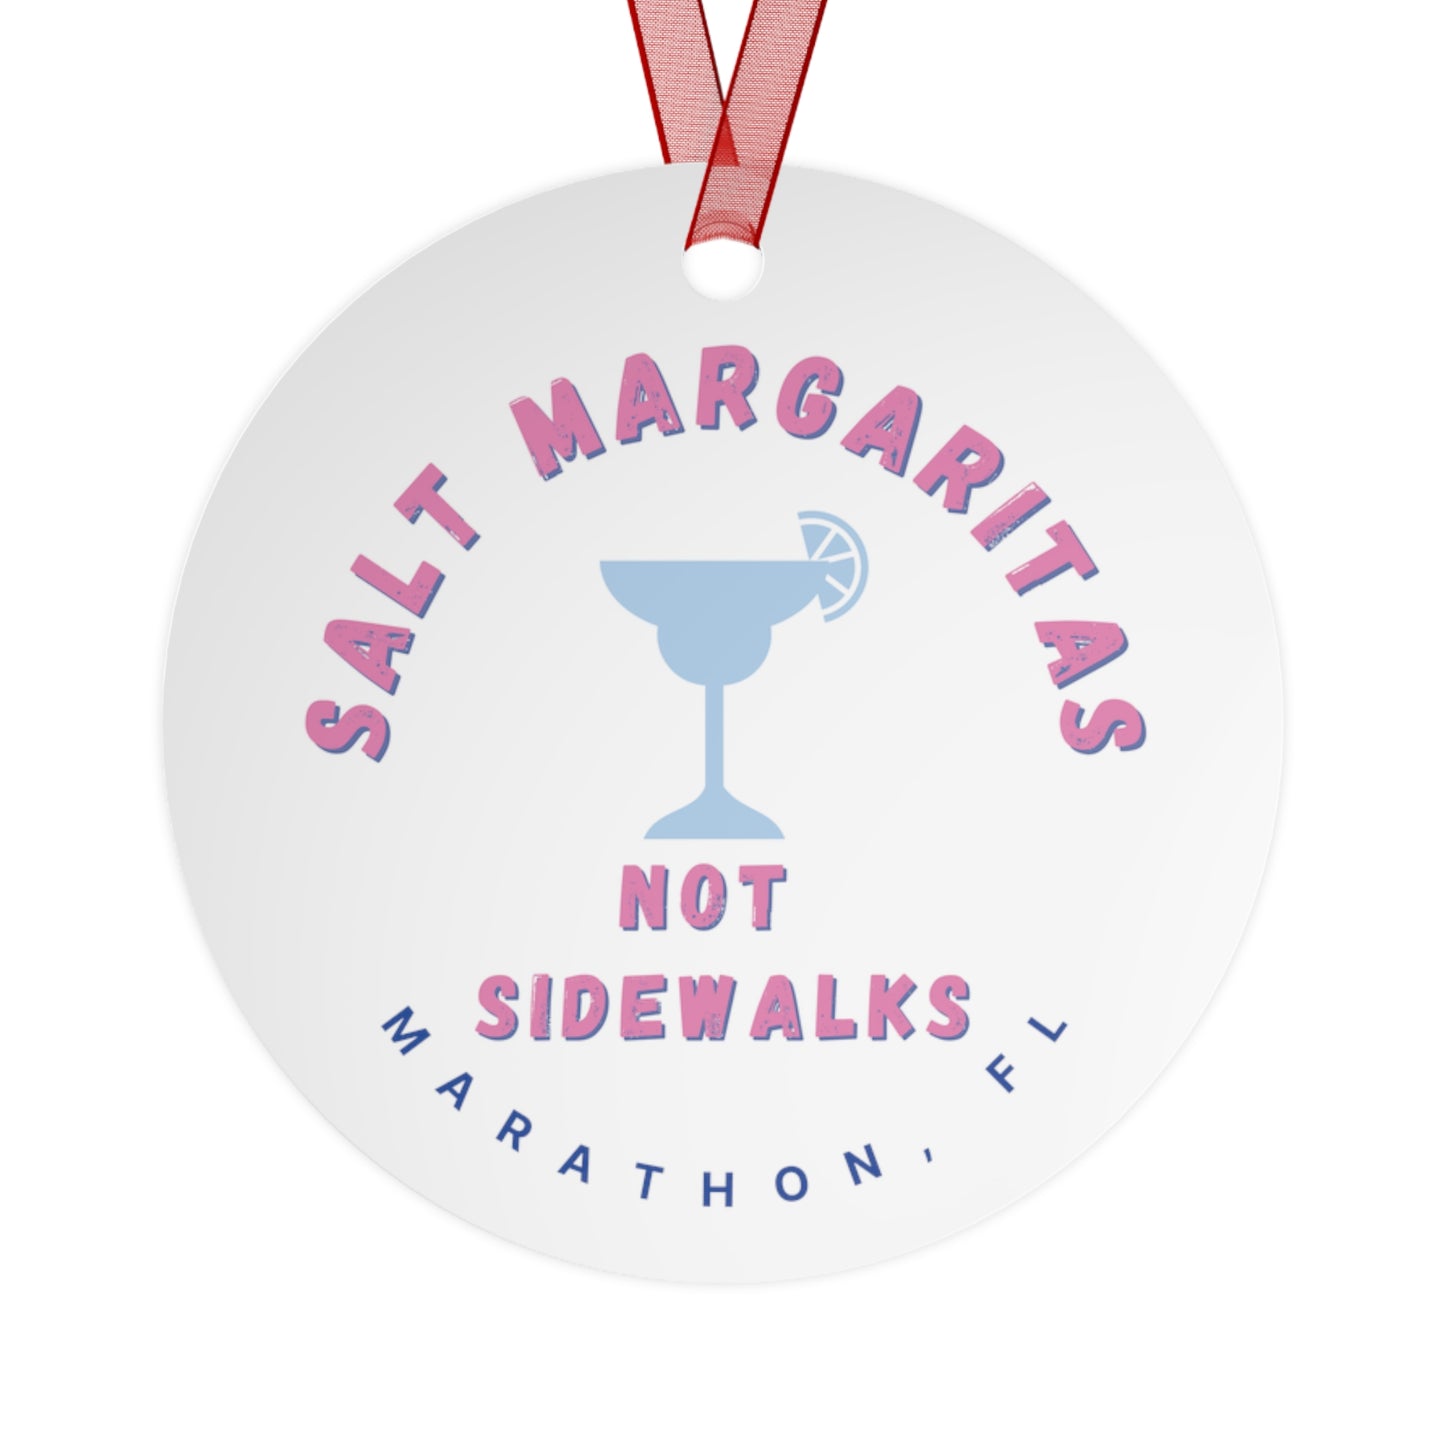 Salt Margaritas, Not Sidewalks - Marathon, FL - Metal Ornament